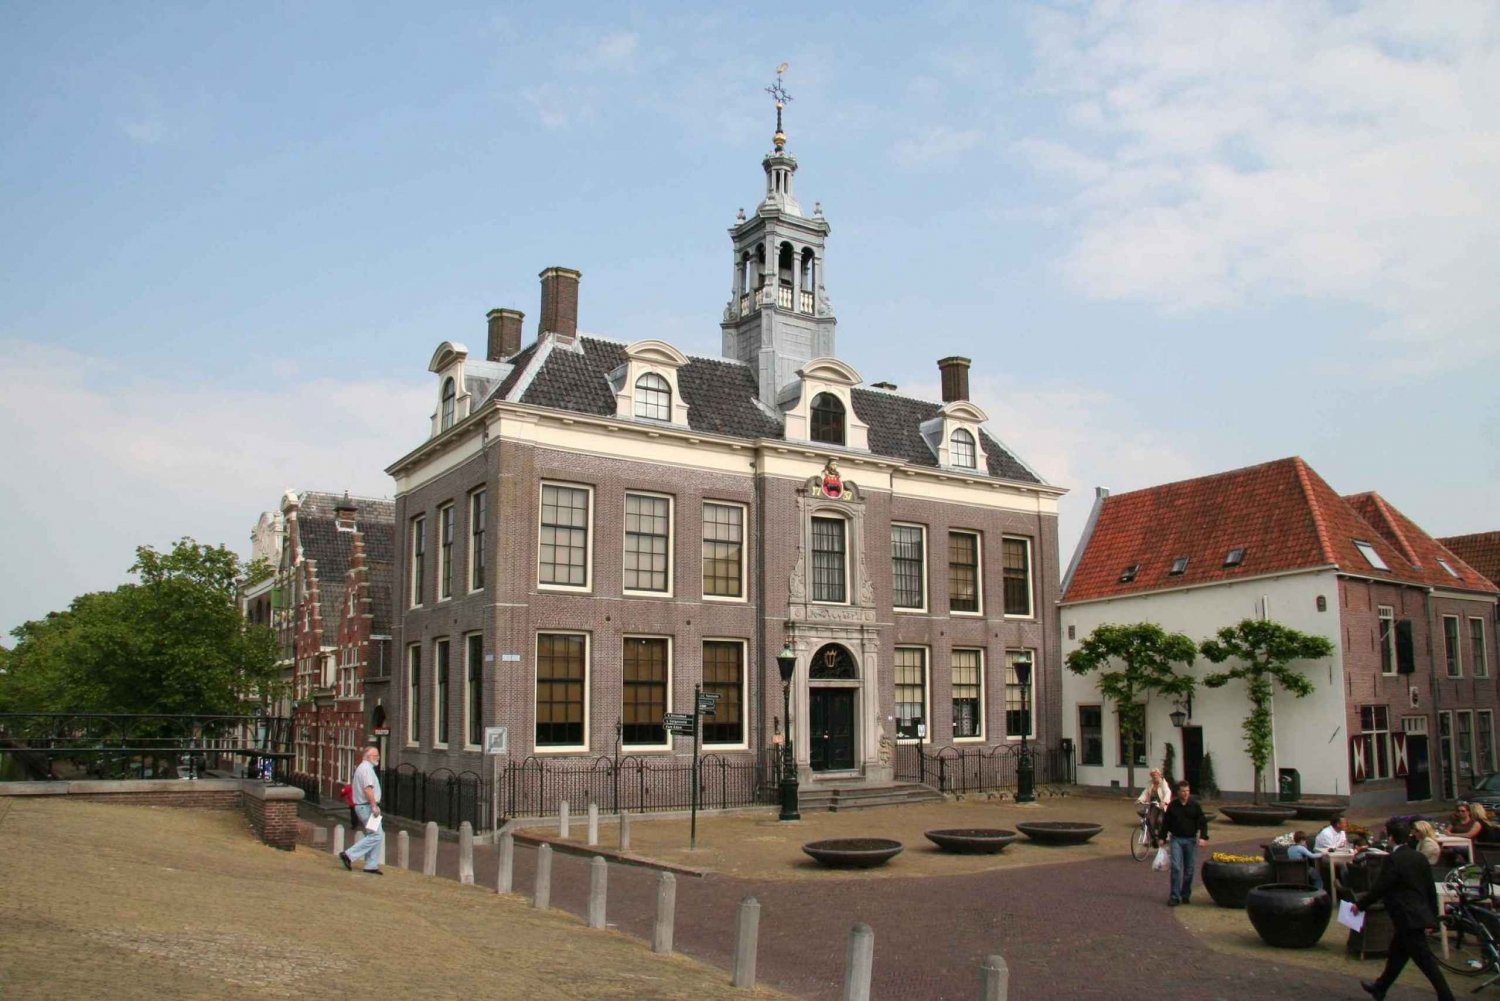 Amsterdam: Volendam, Edam and Windmills Live Guided Tour